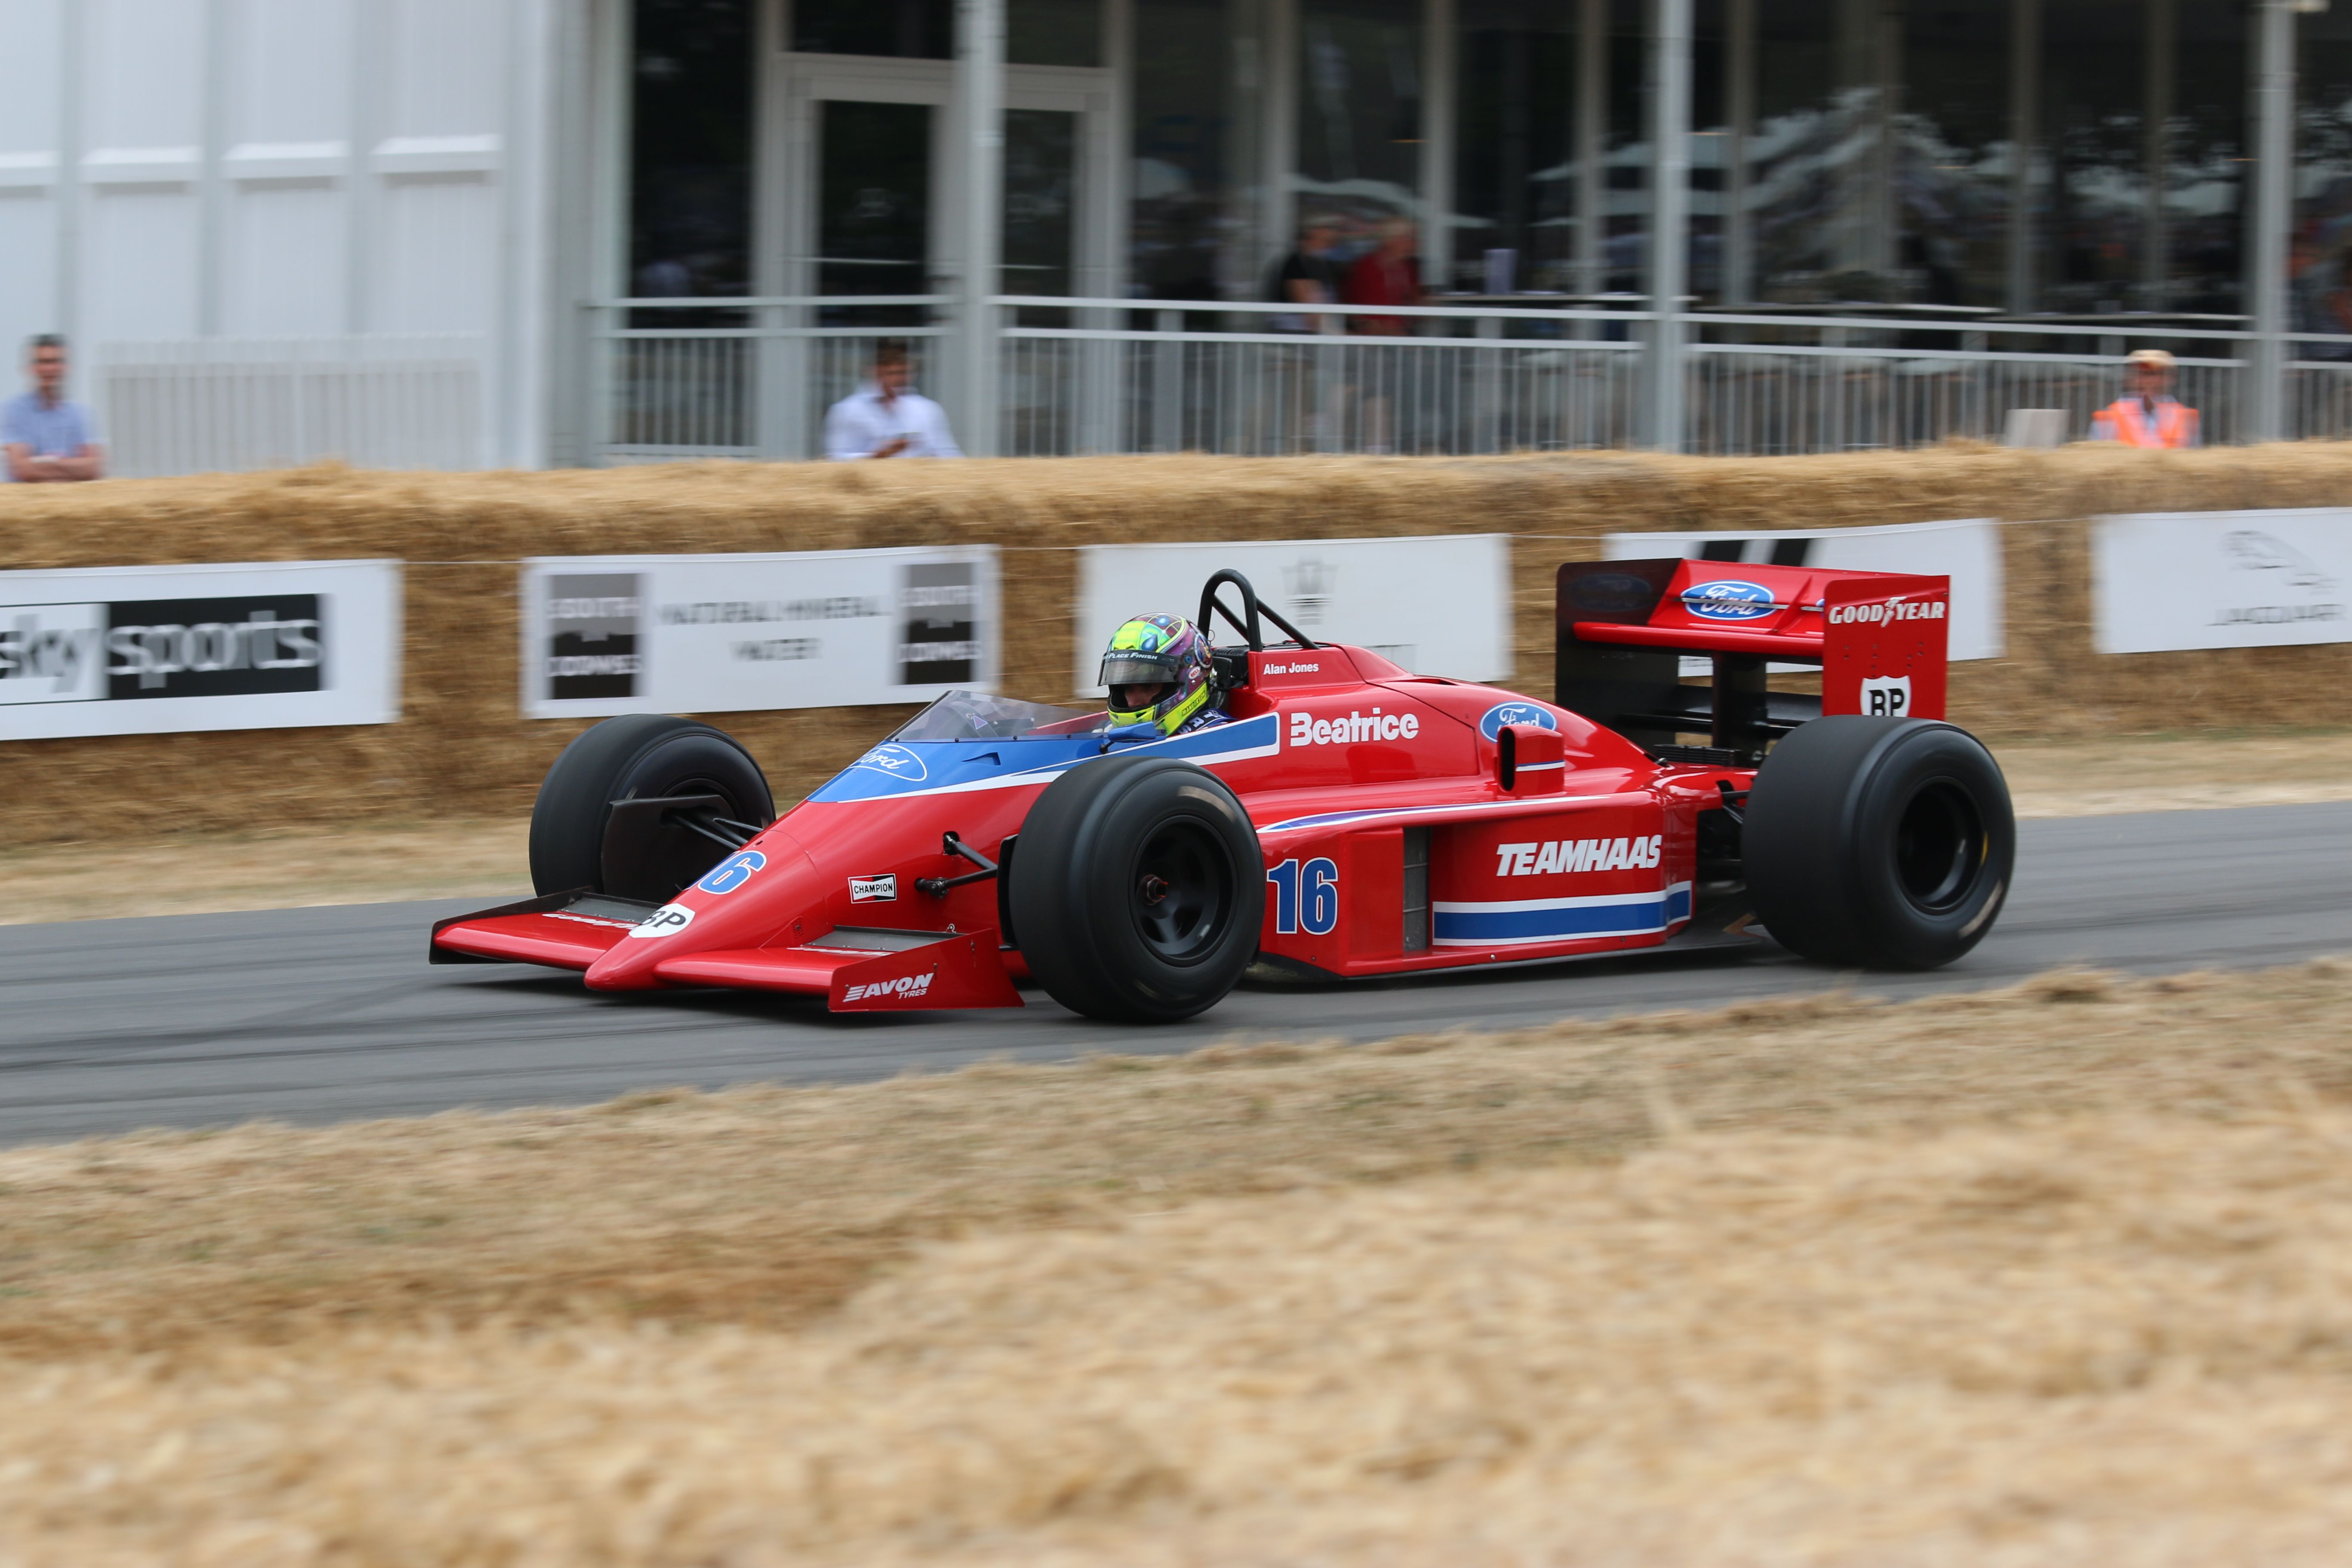 The 1985 Haas Lola THL2.